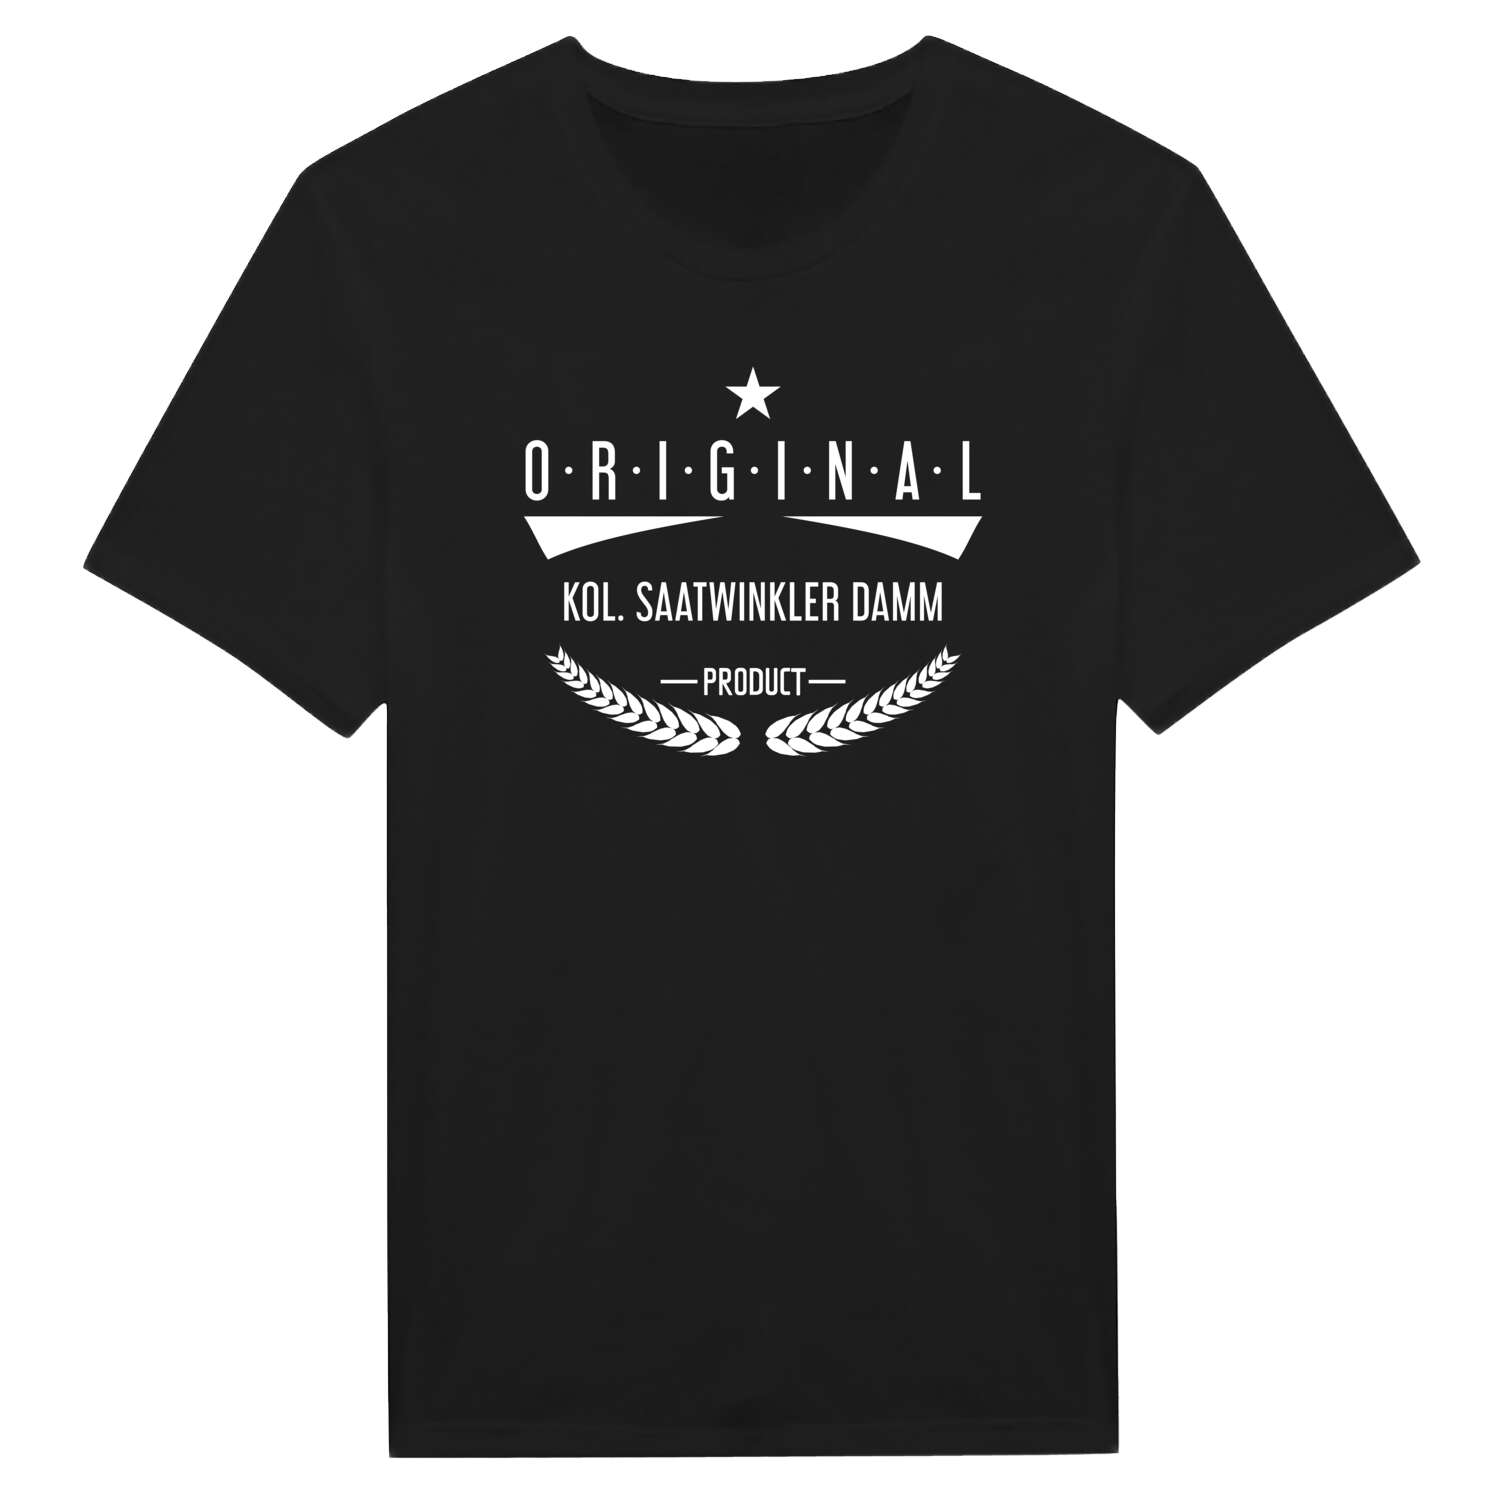 Kol. Saatwinkler Damm T-Shirt »Original Product«